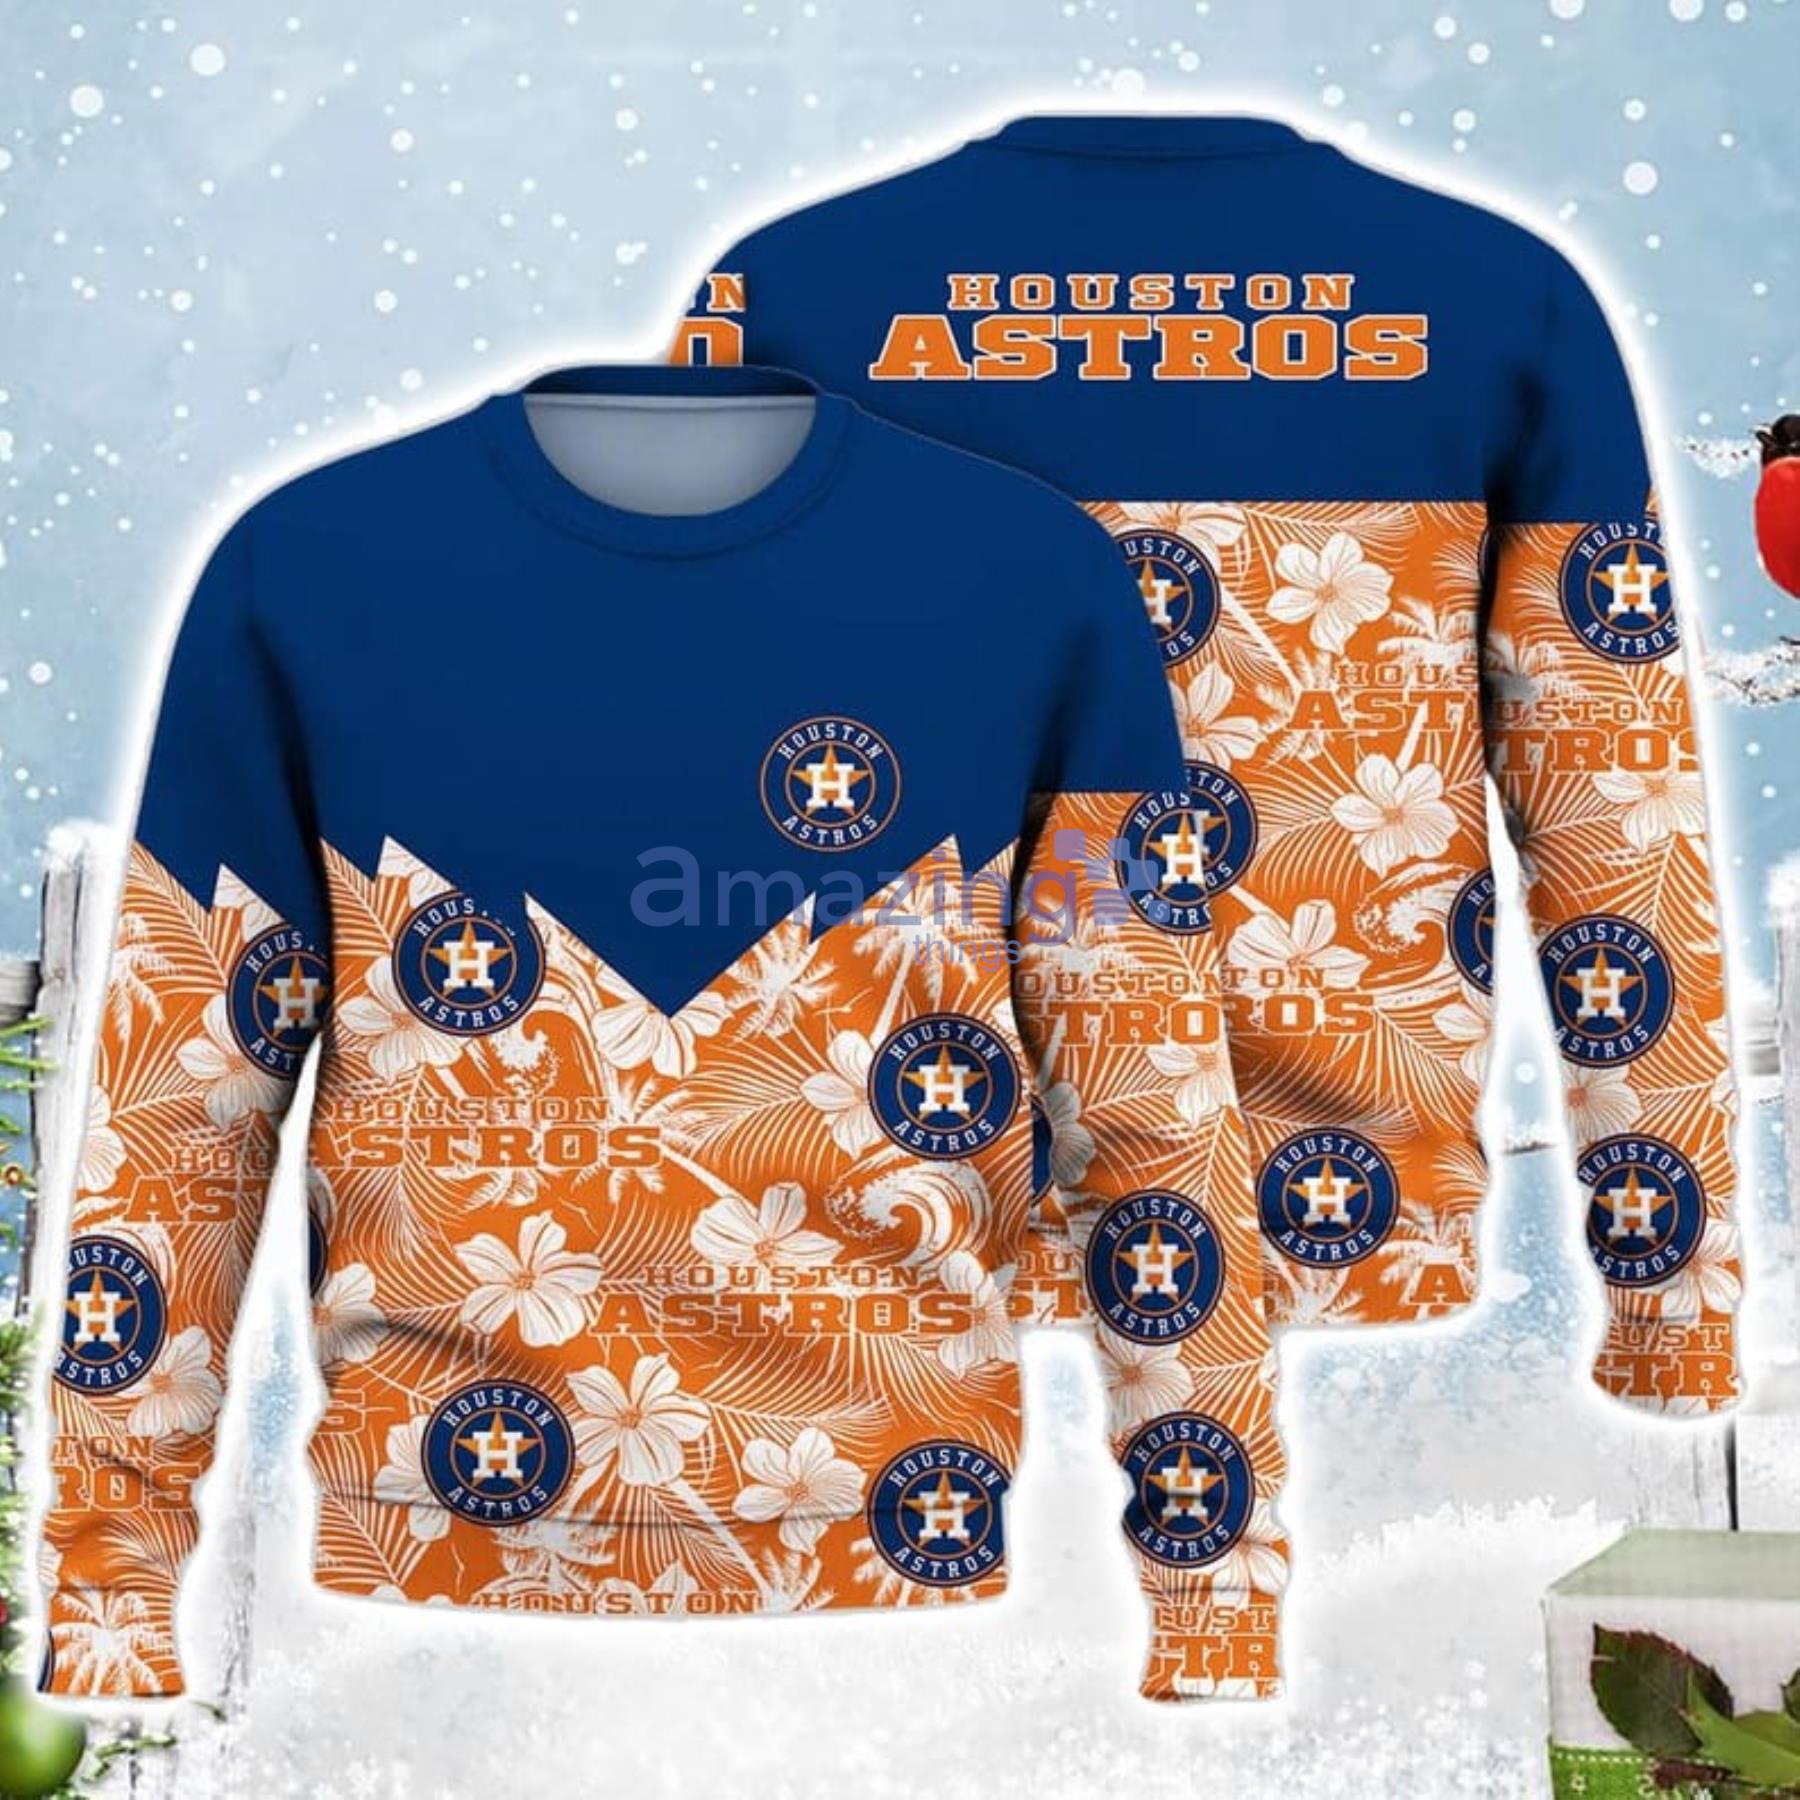 Astros Sweater 